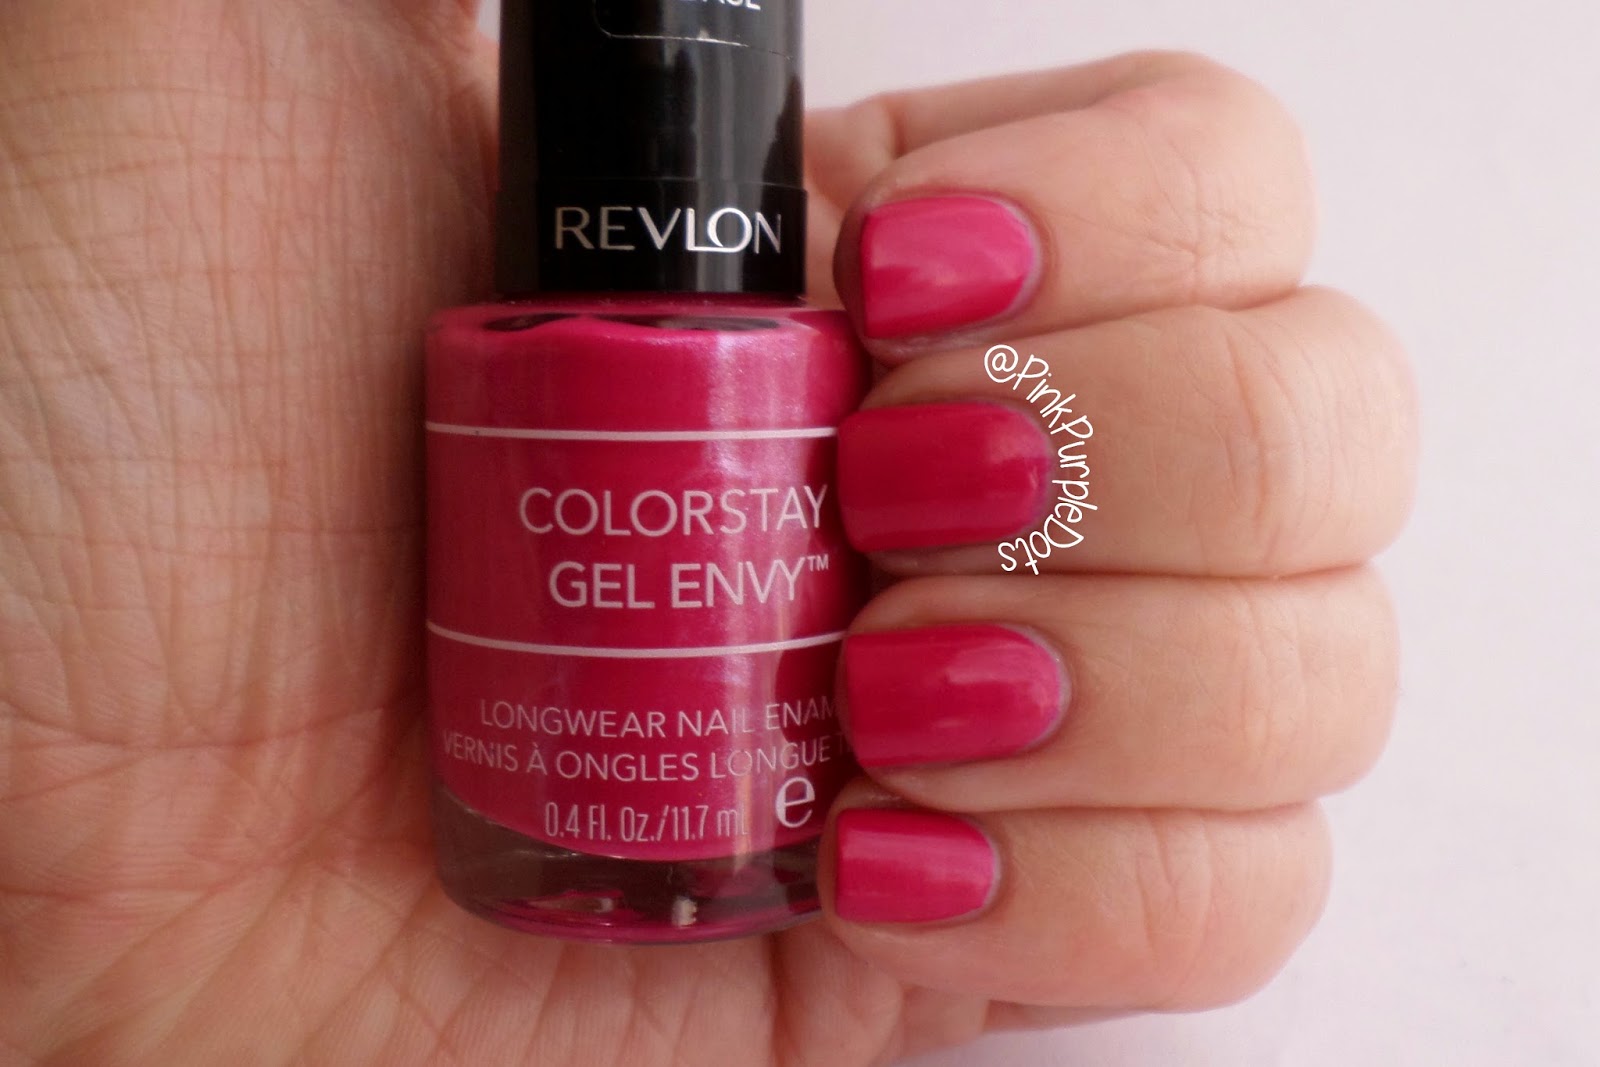 Revlon ColorStay Gel Envy in Pale Pink - wide 5